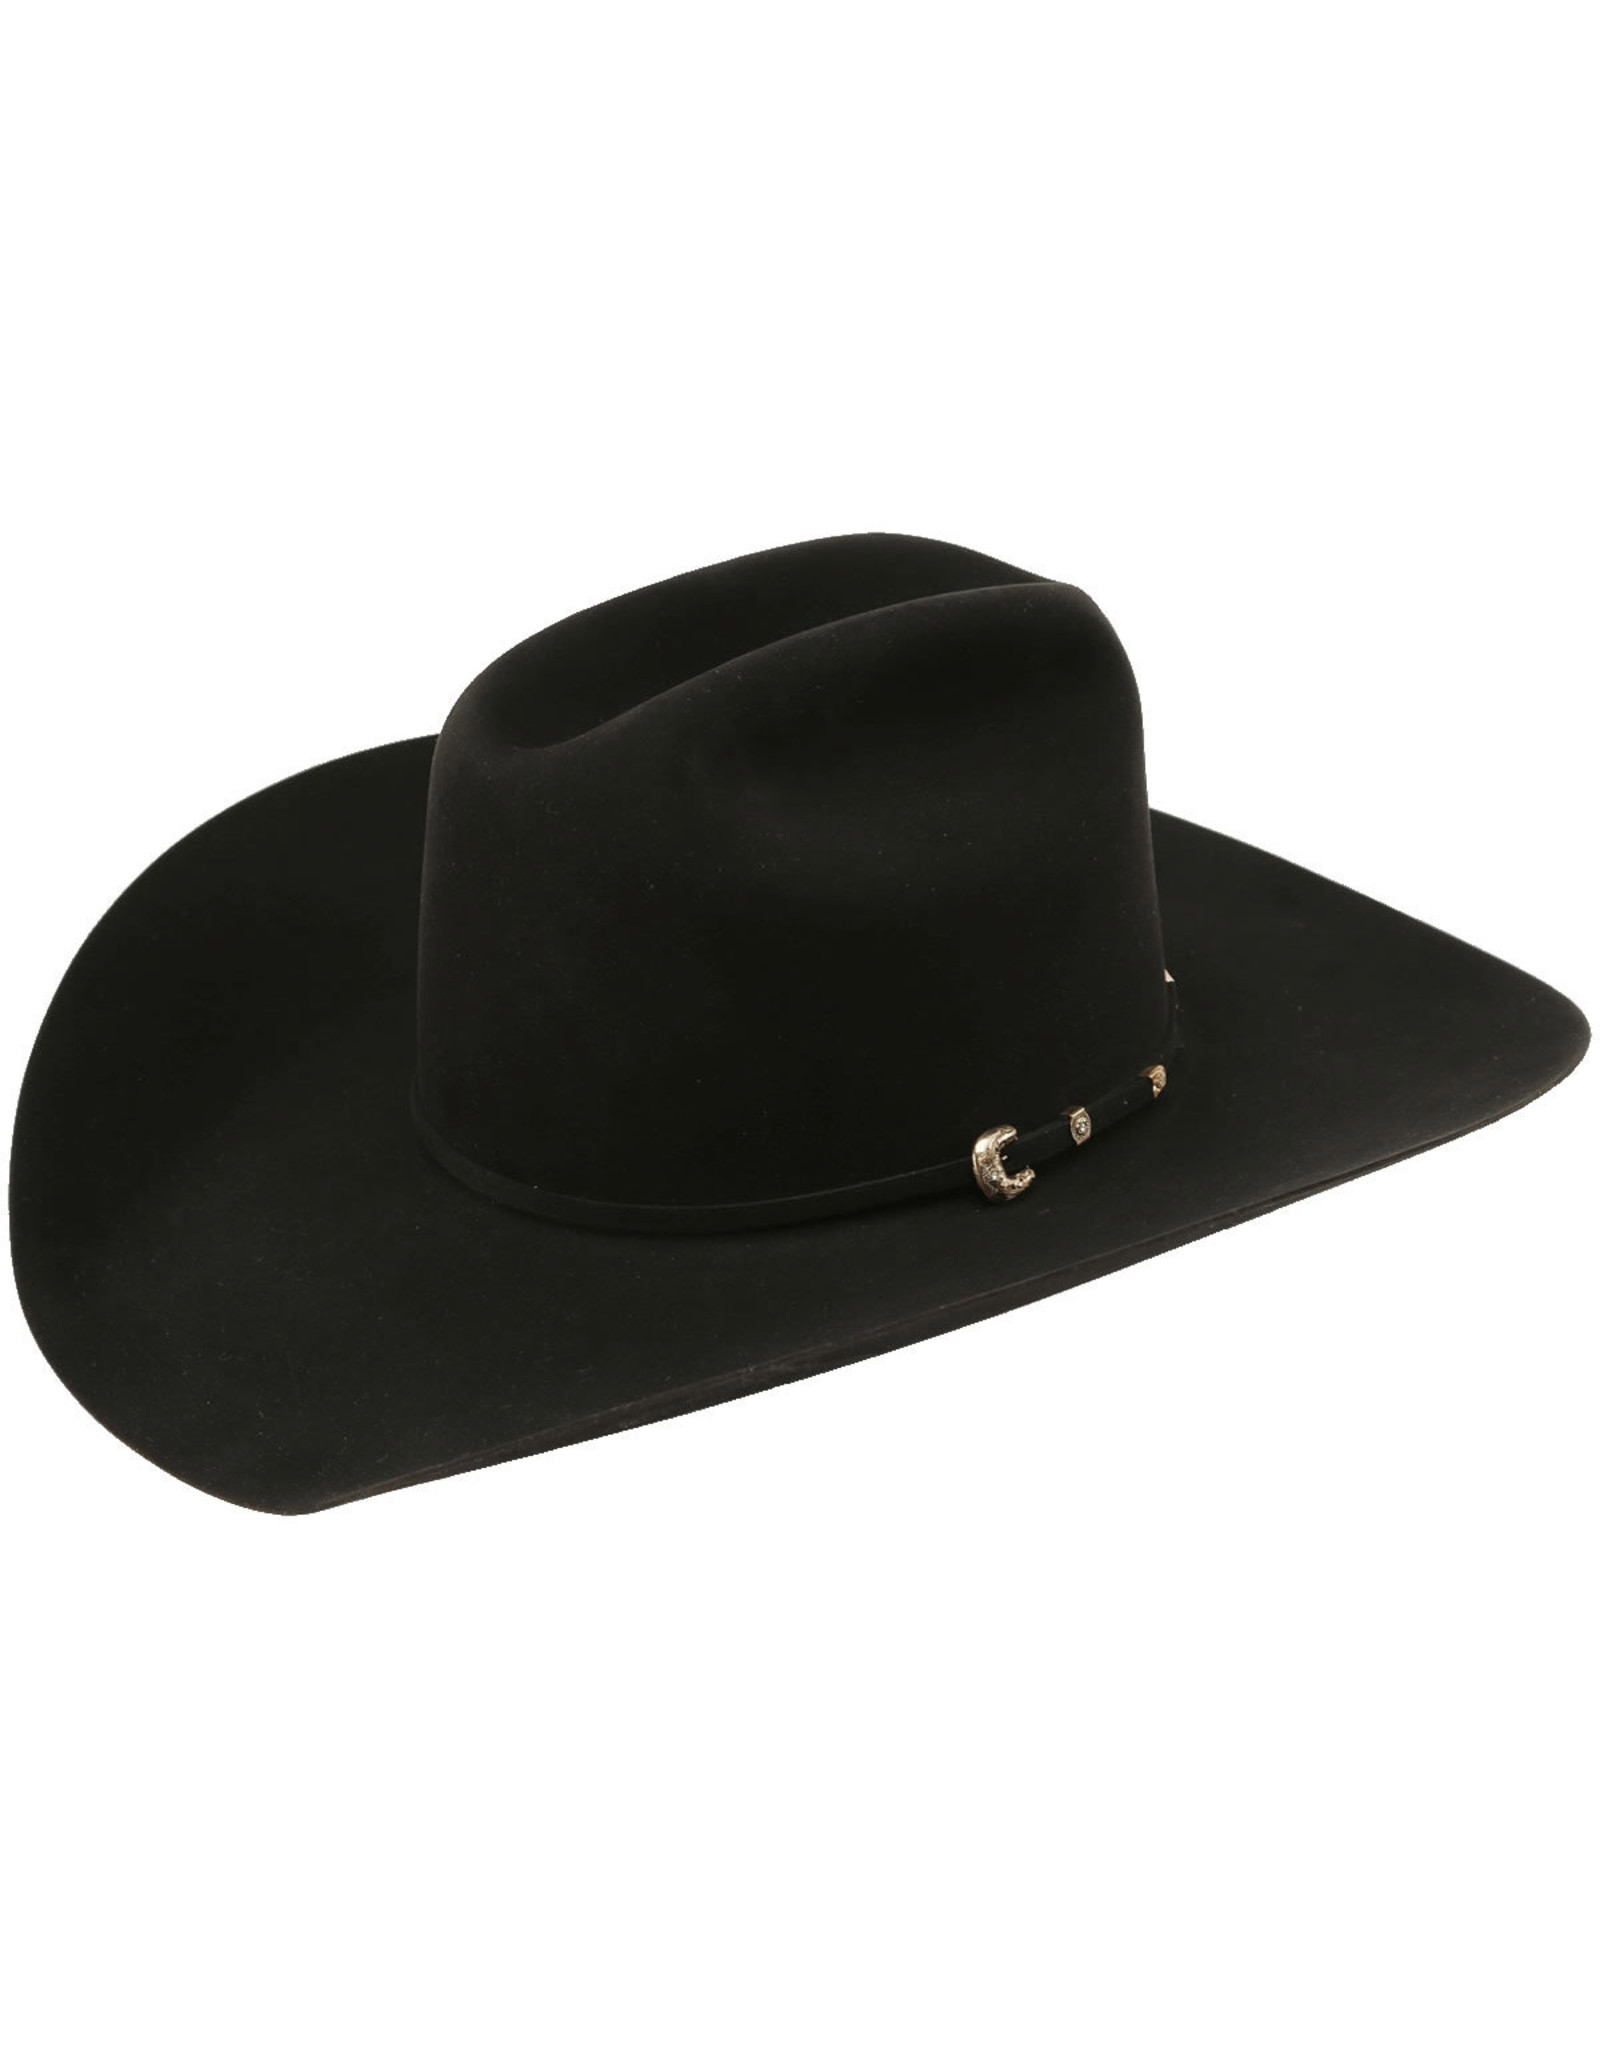 American Hat Co. Black Cattleman 20X Beaver Felt Hat Sz. 7 3/8